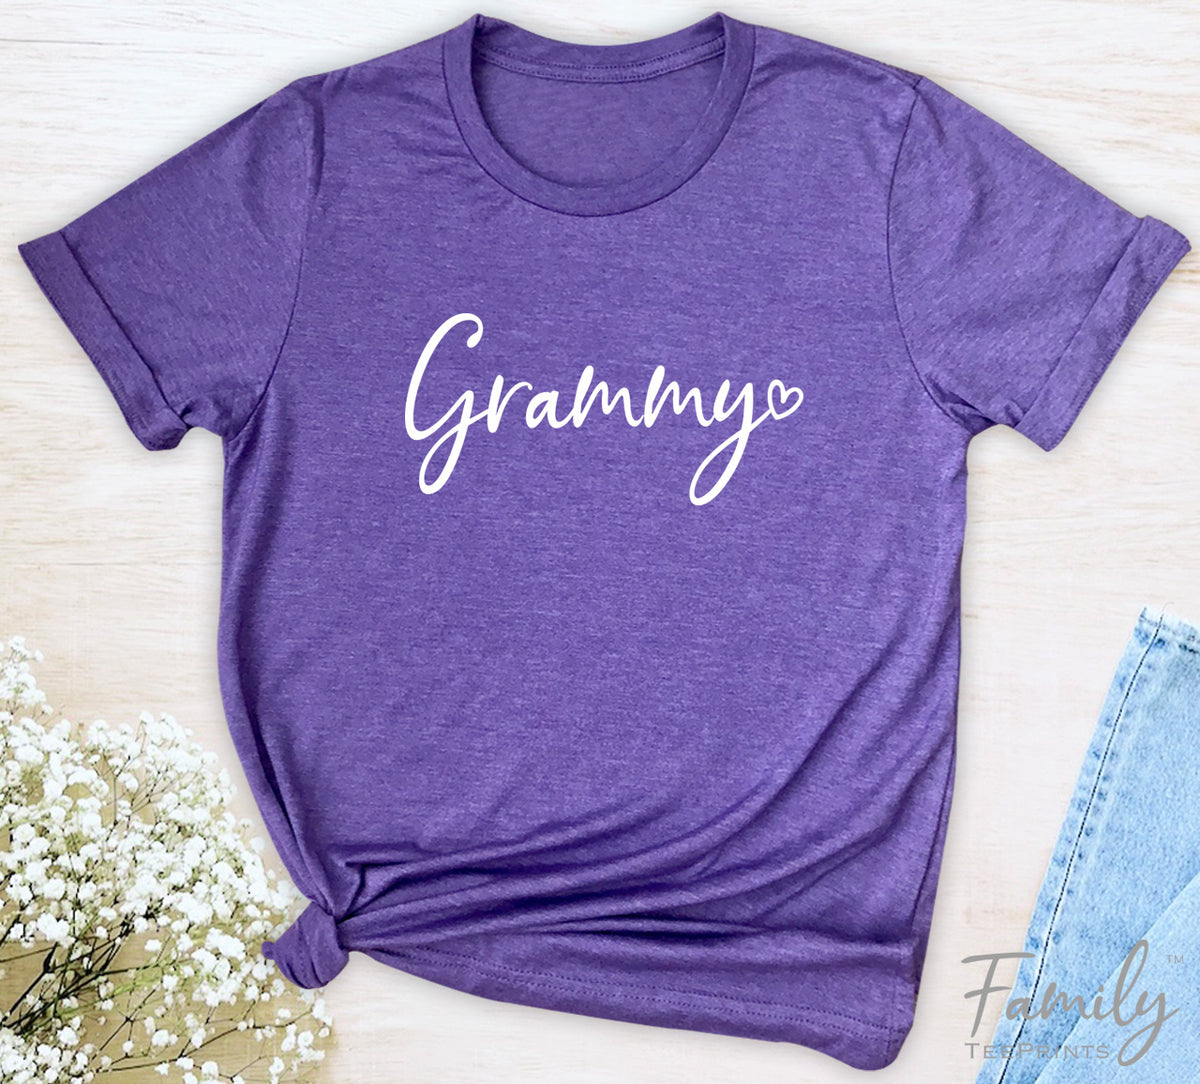 Grammy Heart - Unisex T-shirt - Grammy Shirt - Gift For New Grammy - familyteeprints